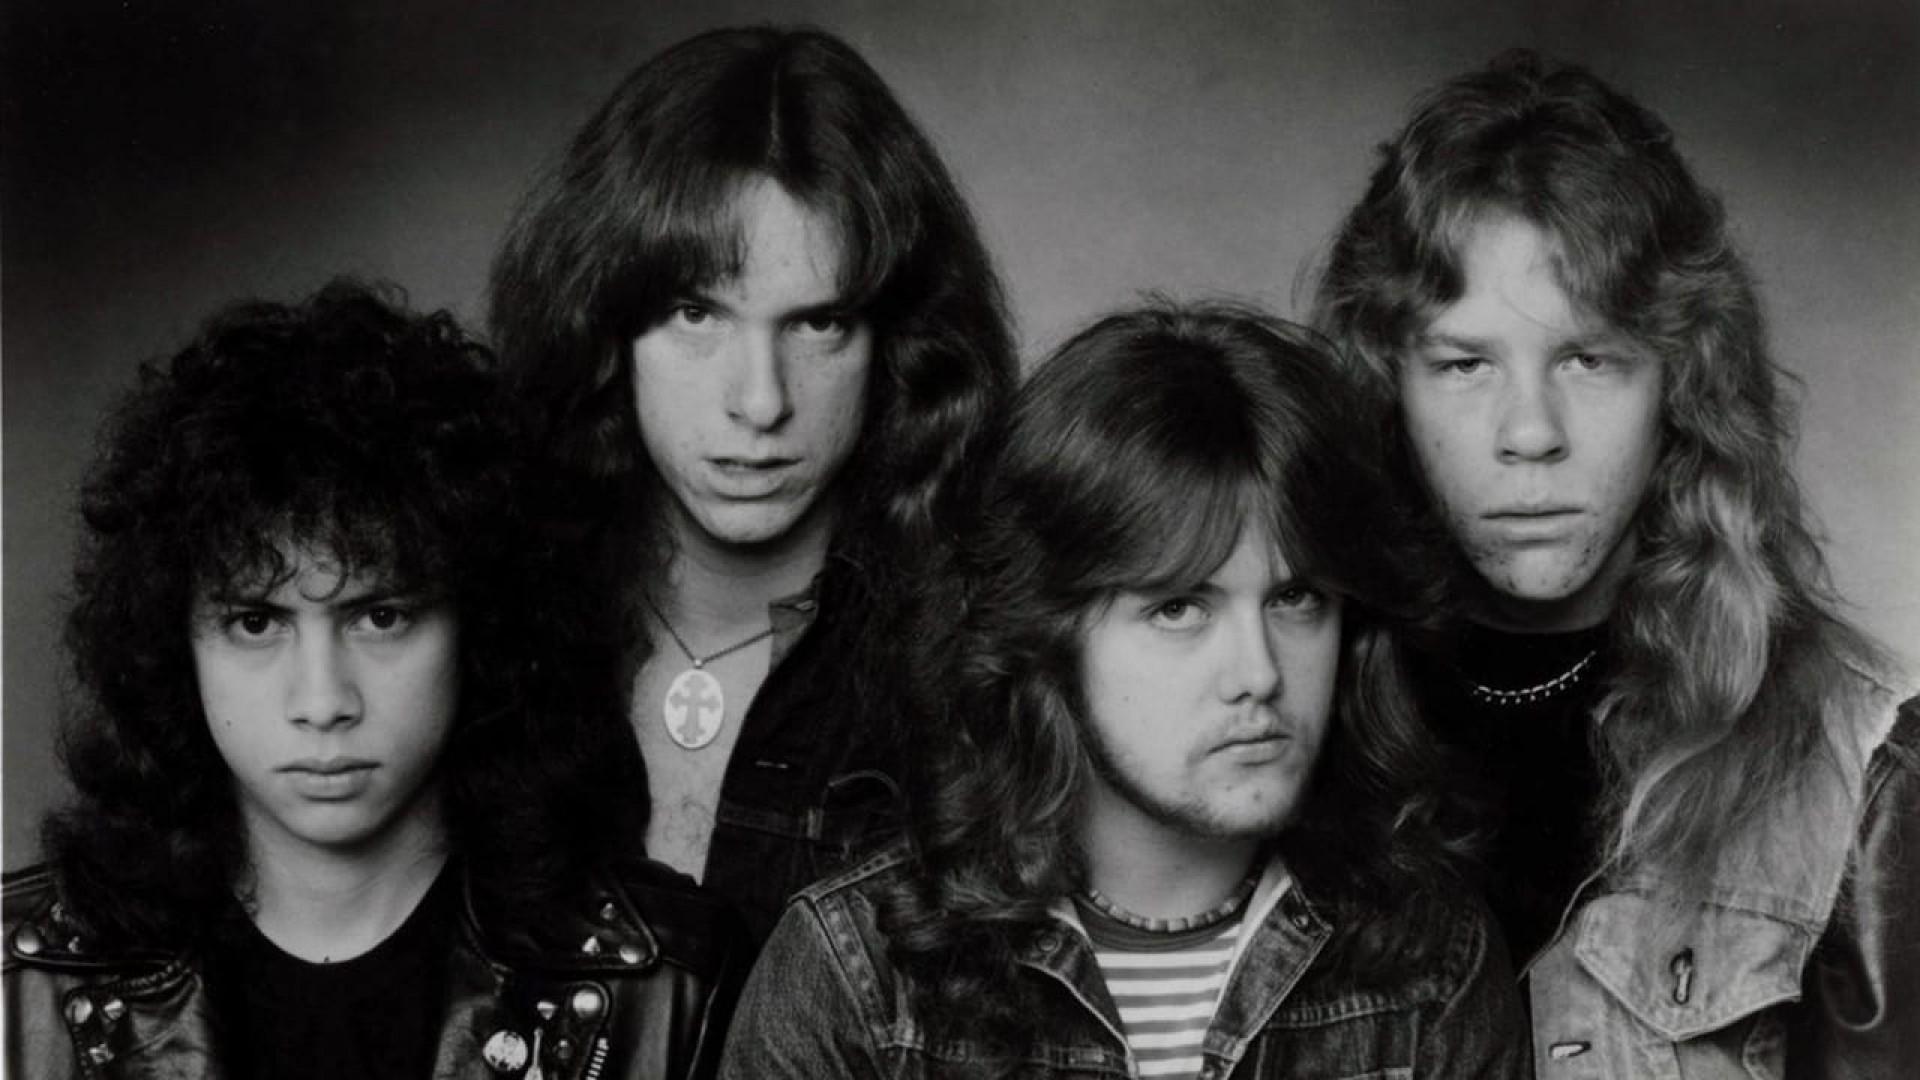 Metallica: Kill 'Em All in Chicago 1983